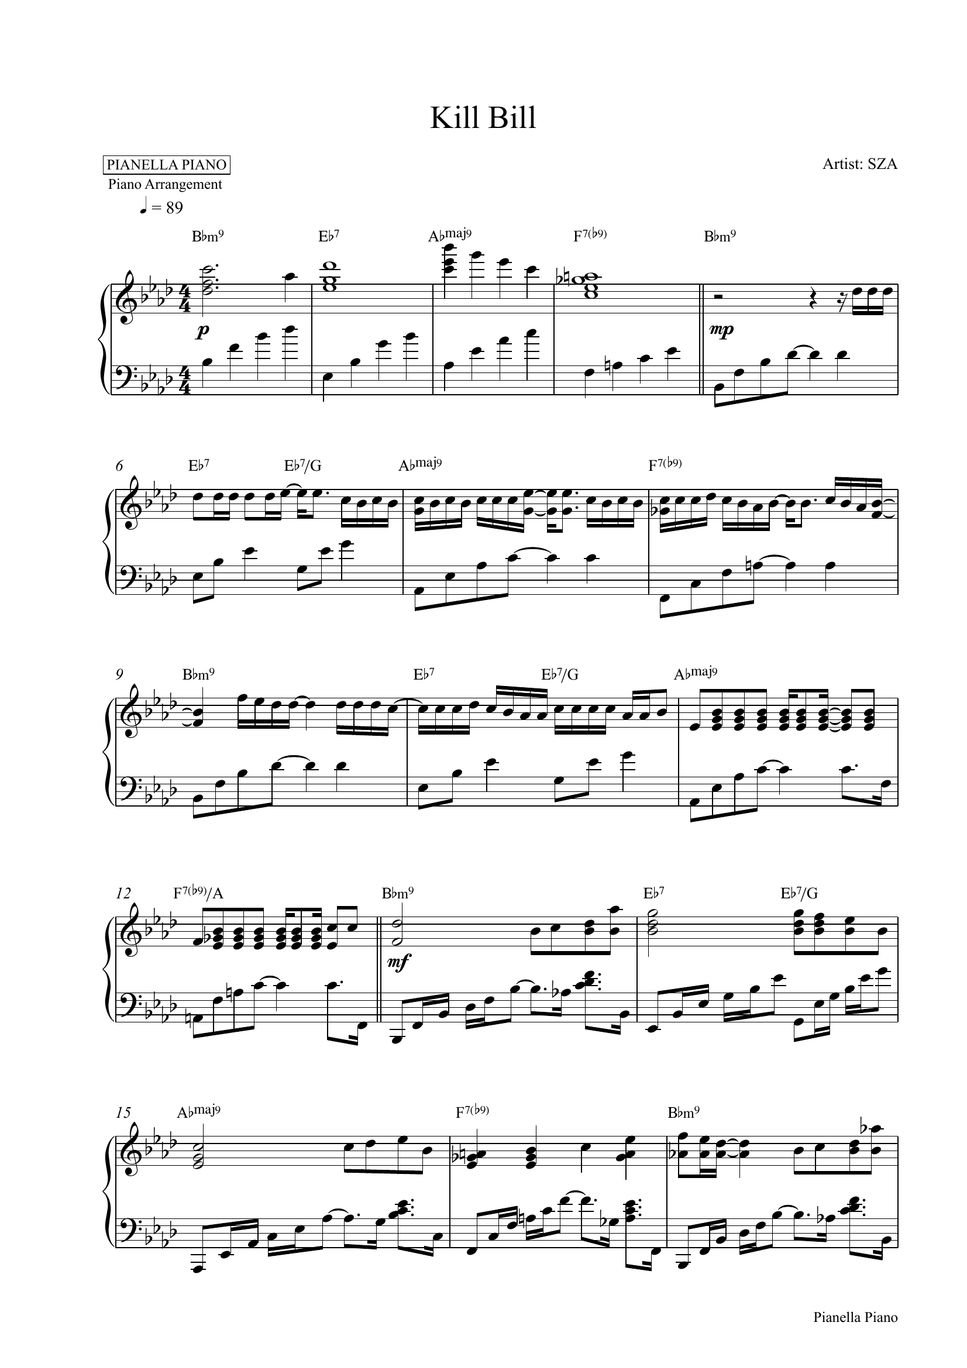 SZA - Kill Bill (Piano Sheet) 楽譜 by Pianella Piano